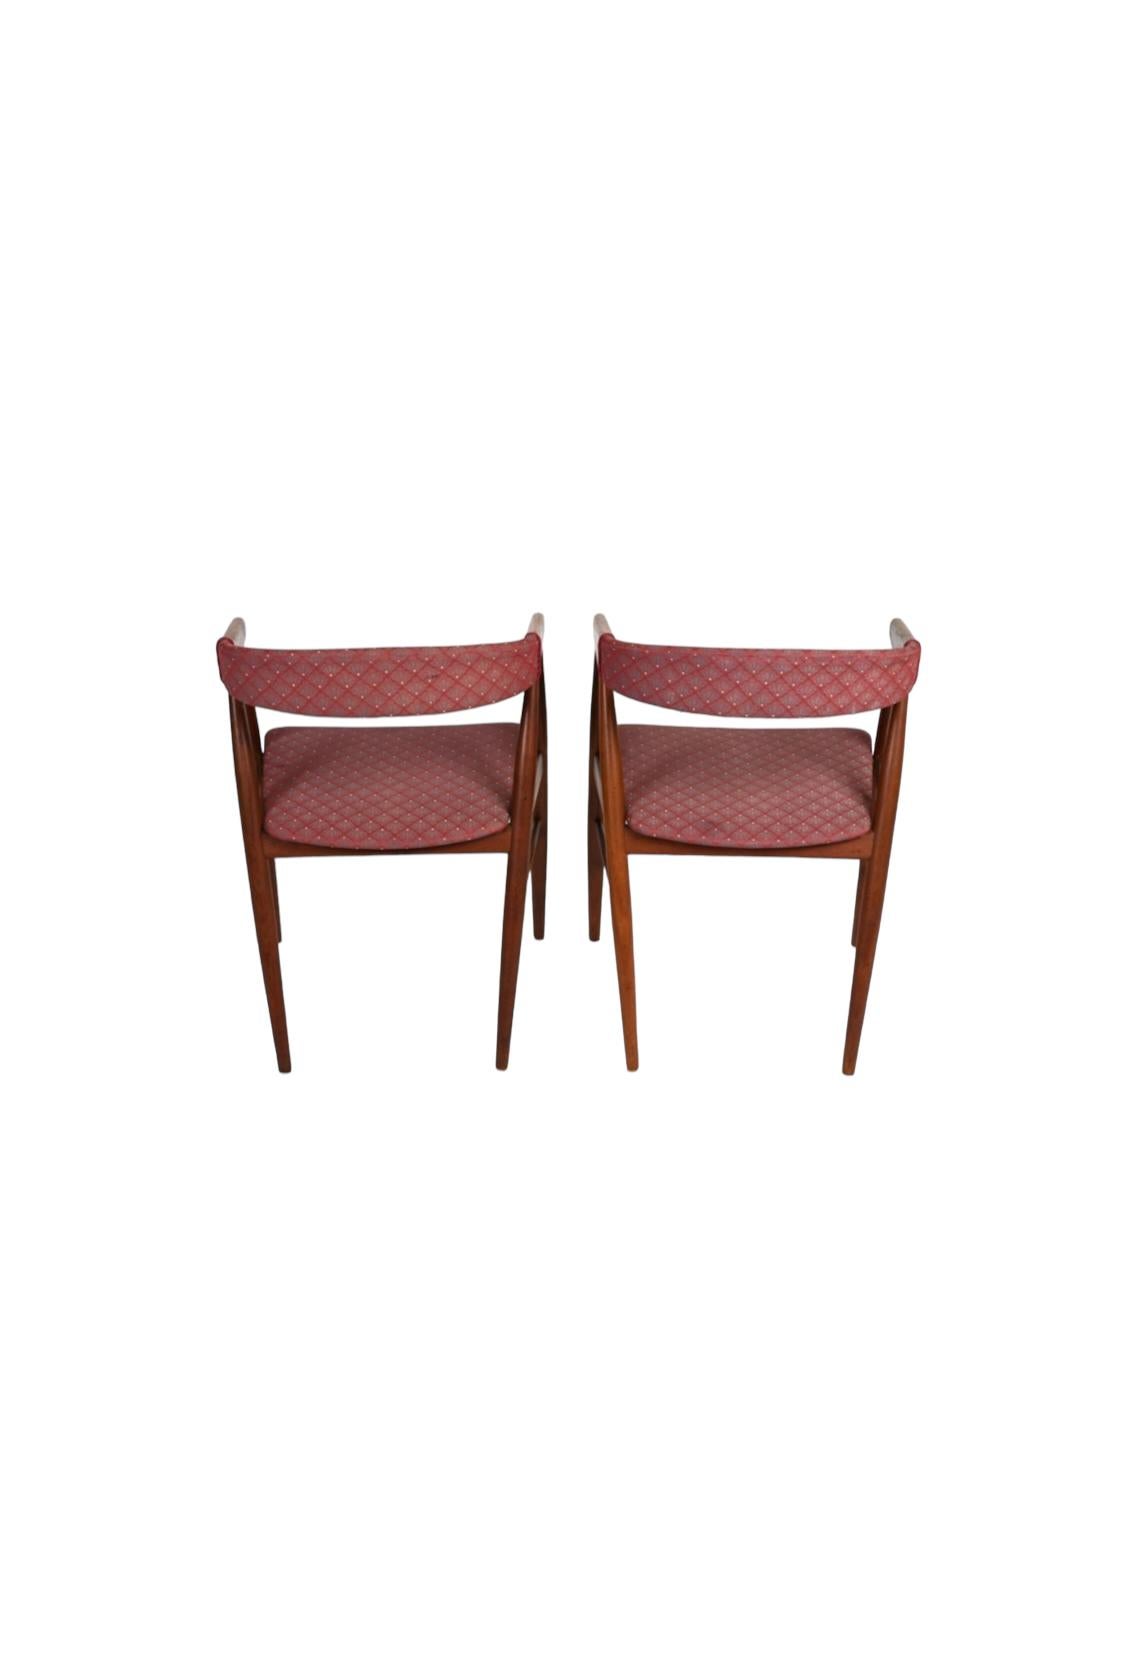 Danish Modern Teak Dining Chairs by Aksel Bender Madsen & Ejner Larsen 1